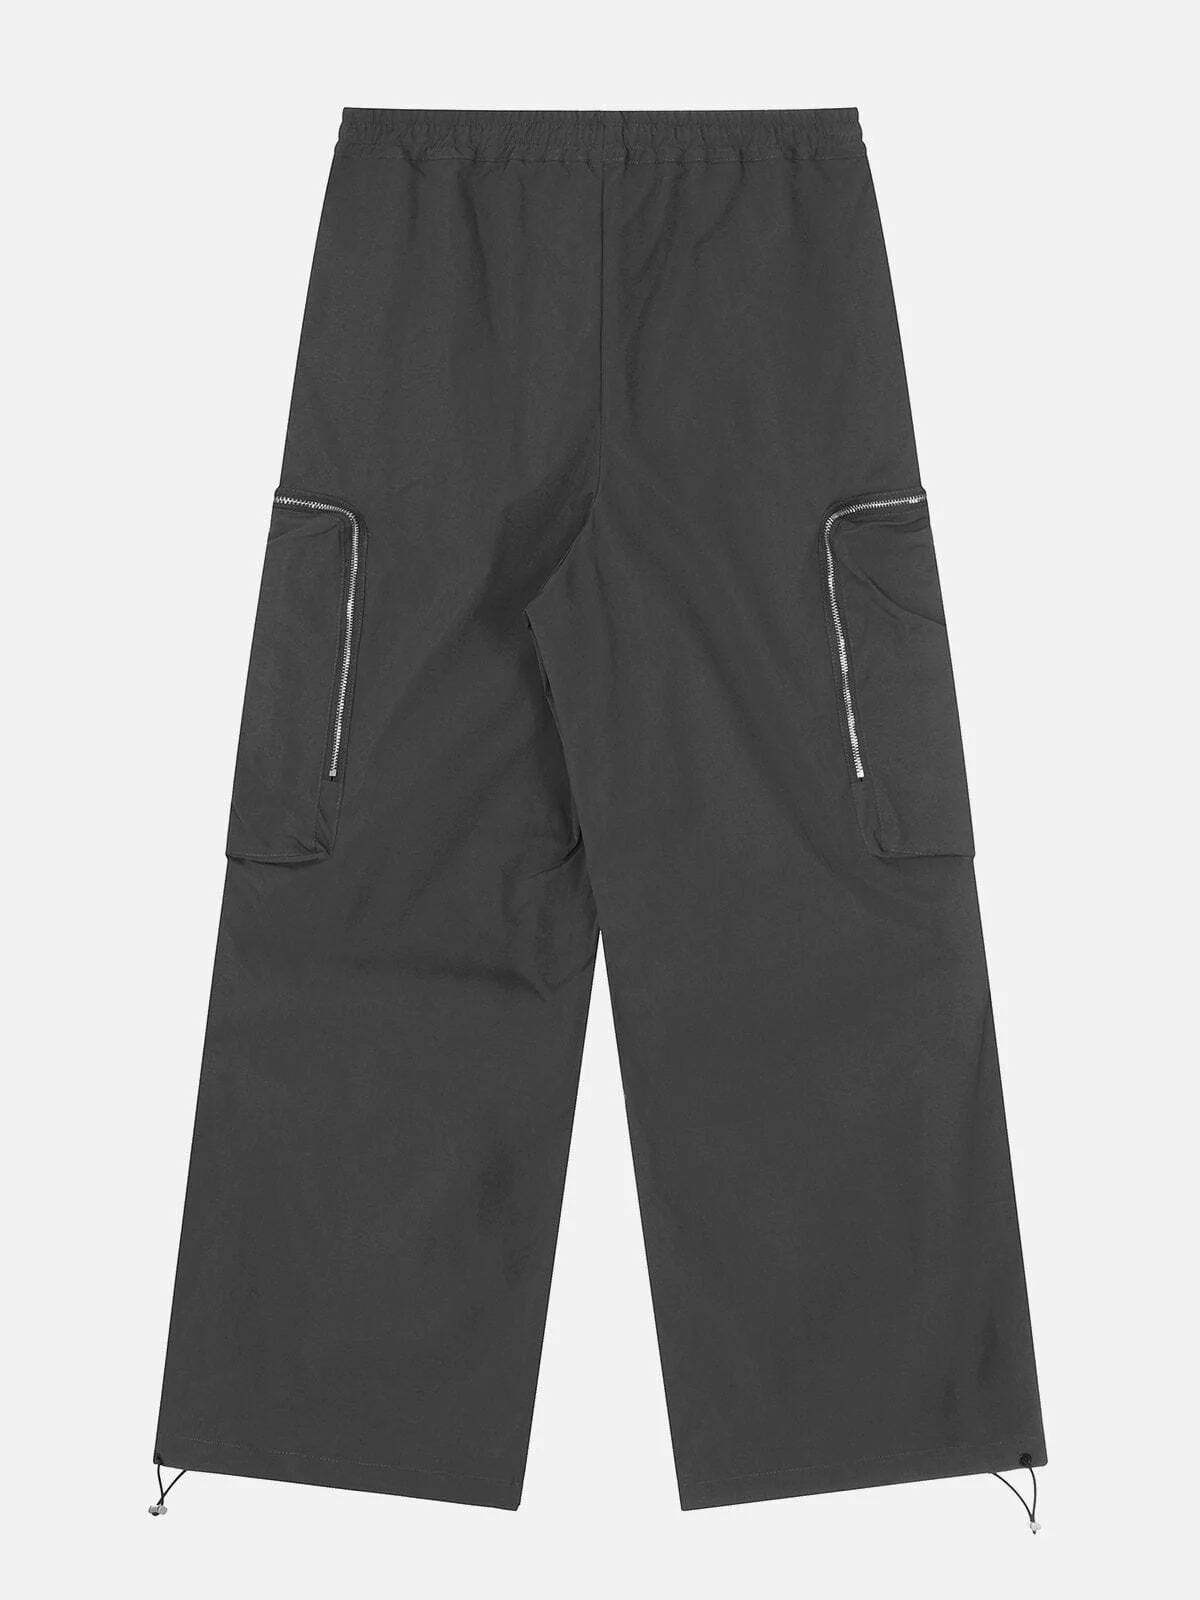 functional big pocket pants urban streetwear 5041